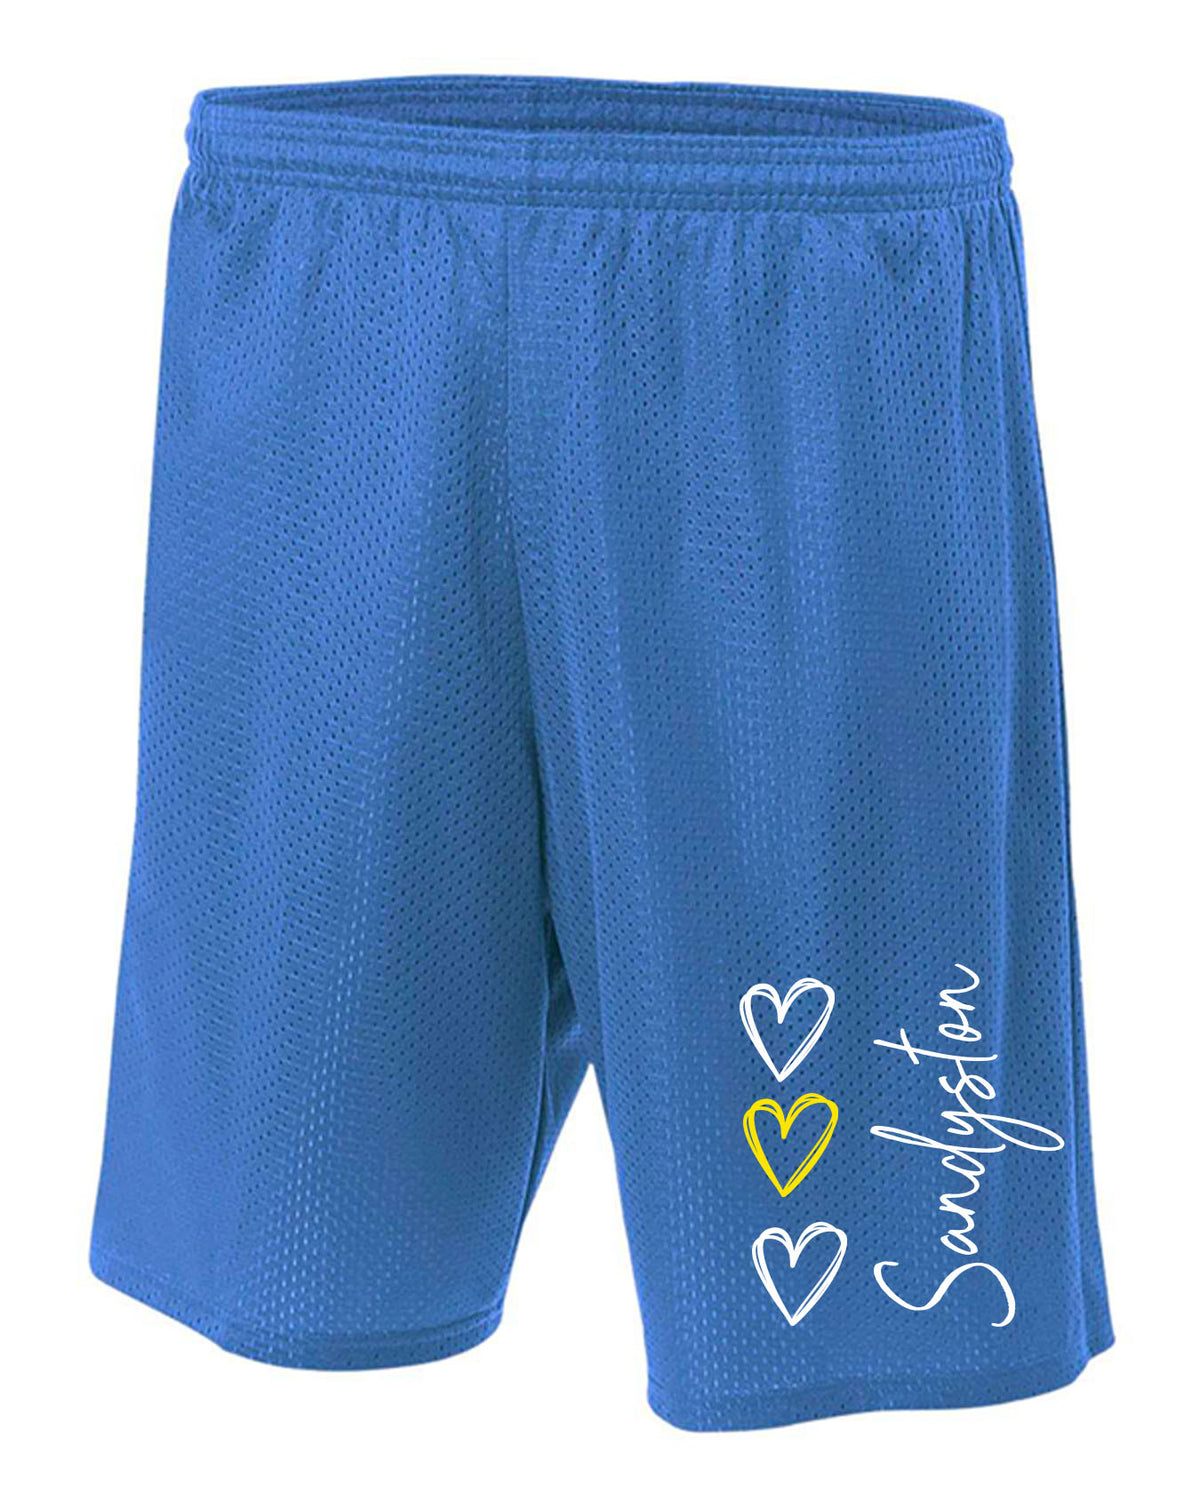 Sandyston Walpack Design 18 Mesh Shorts